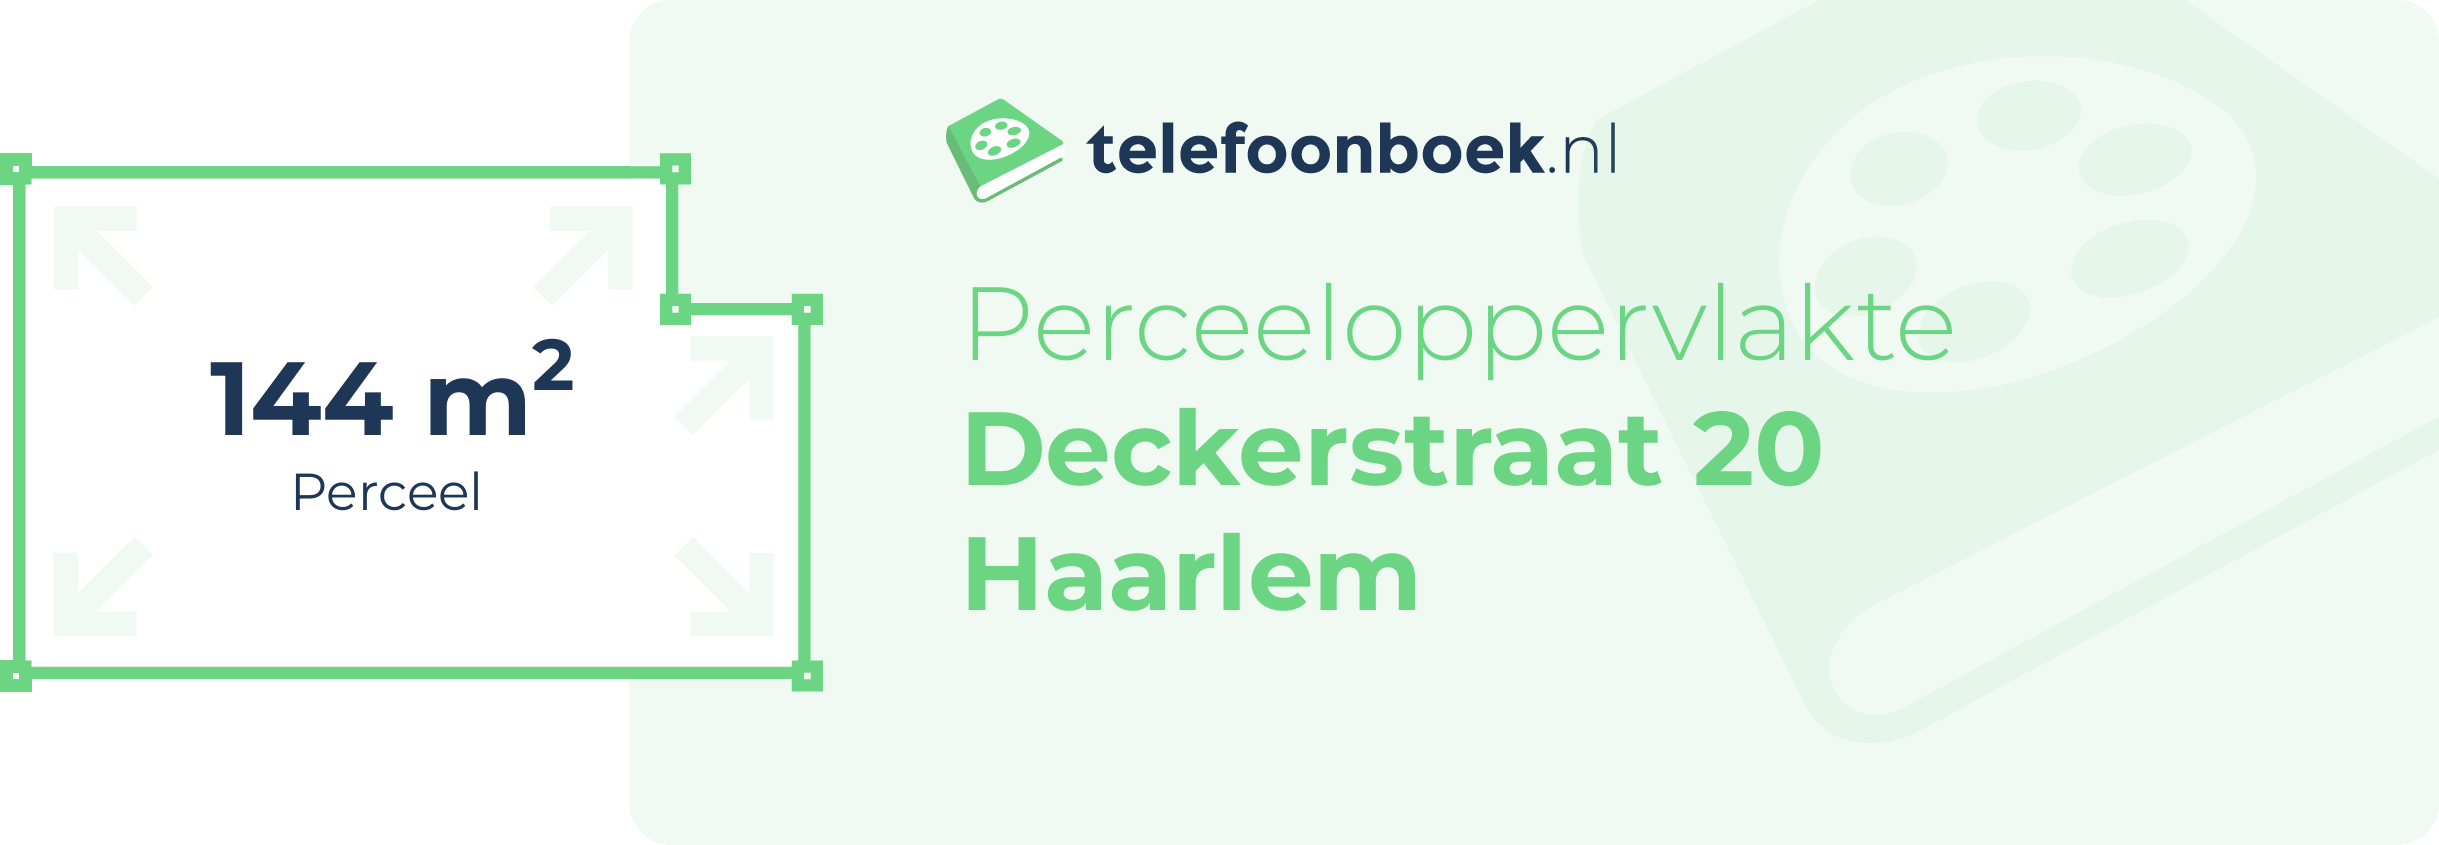 Perceeloppervlakte Deckerstraat 20 Haarlem